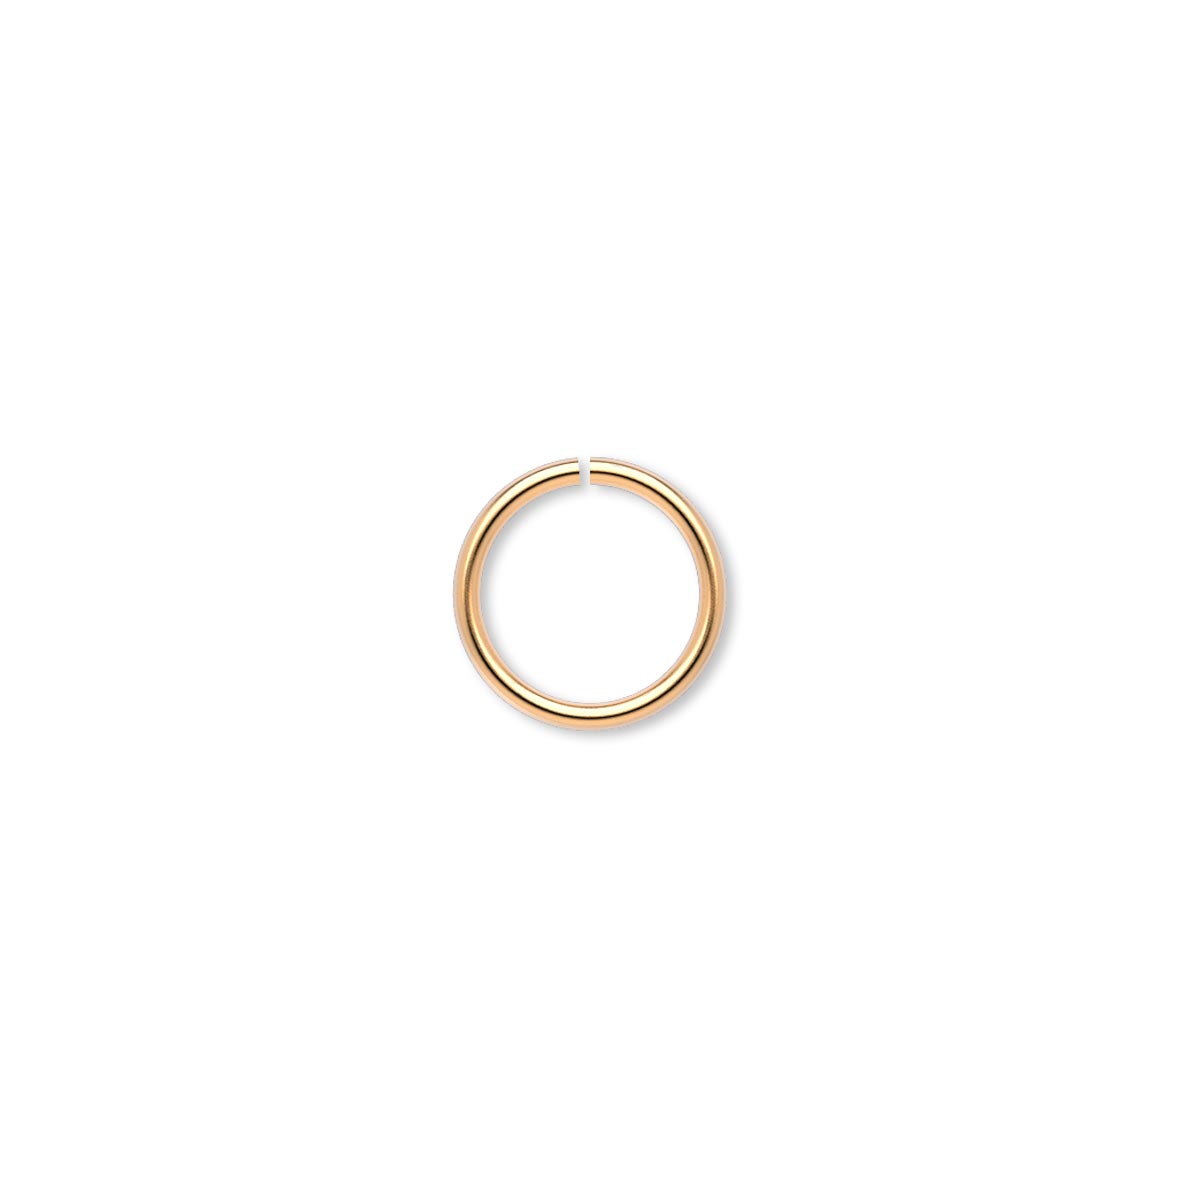 Jump ring, gold-plated brass, 10mm round, 8mm inside diameter, 18 gauge ...